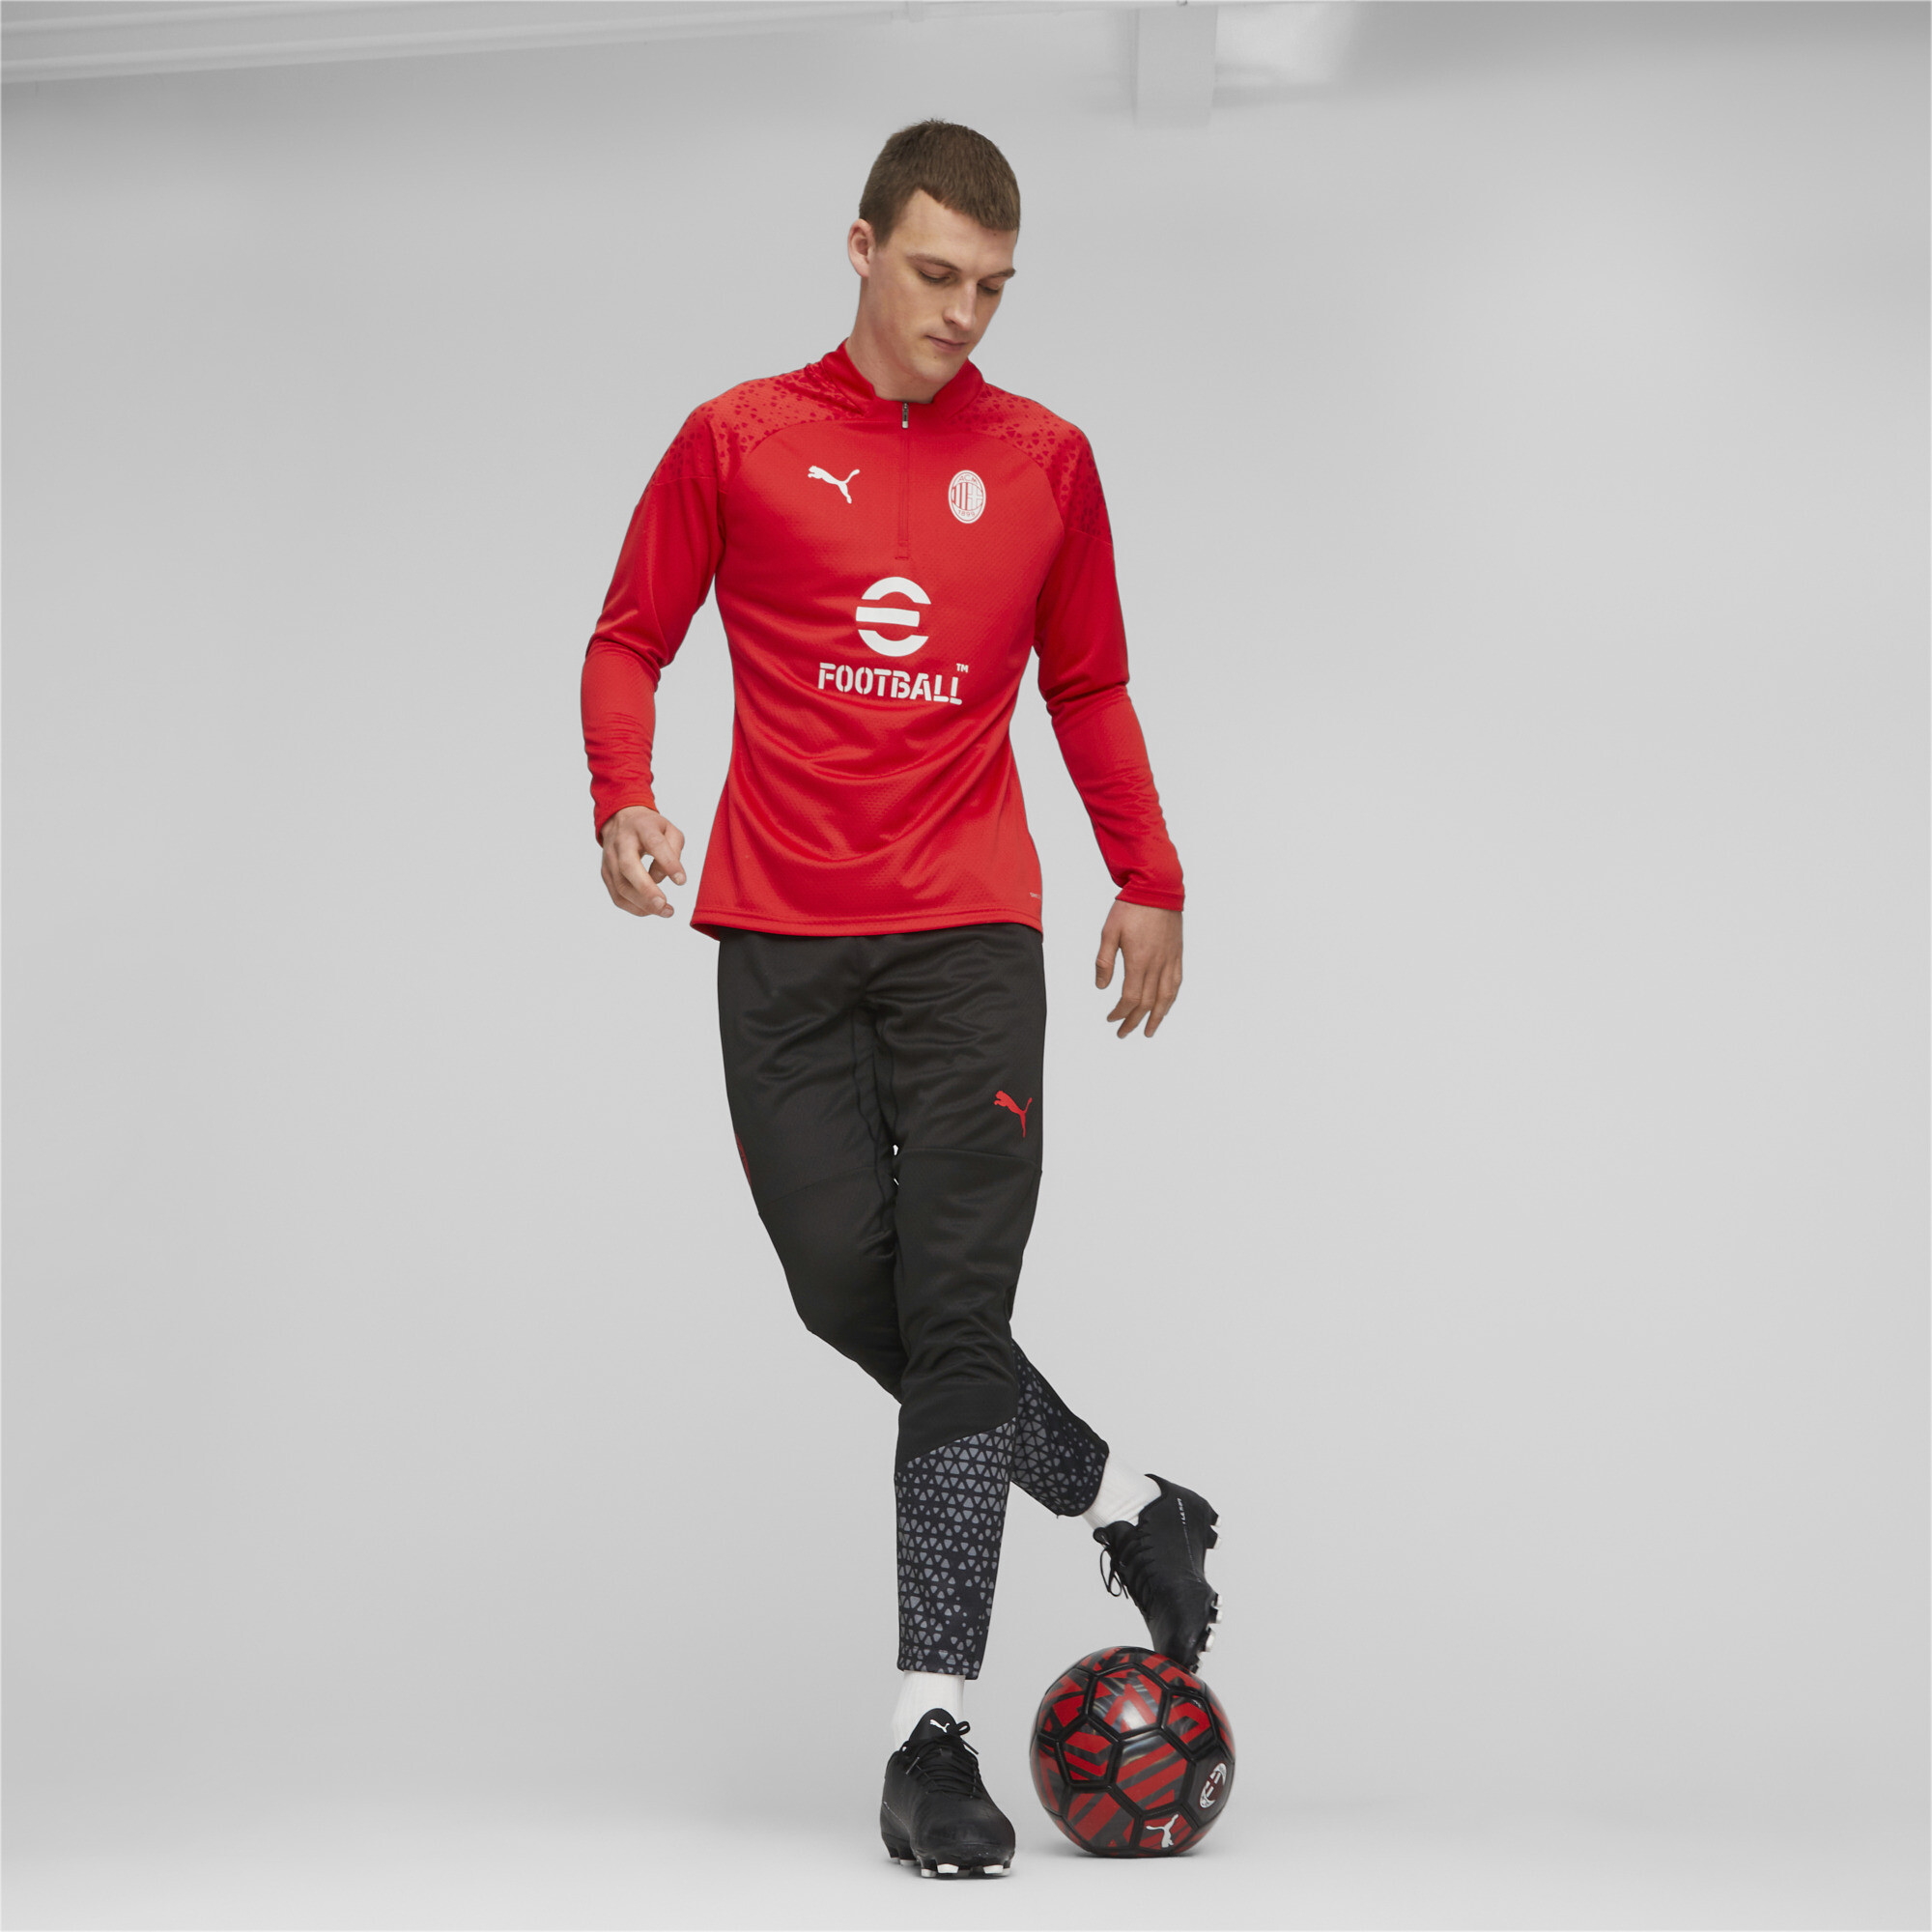 Men's Puma AC Milan Football Training Quarter-zip Top, Red Top, Size 3XL Top, Clothing